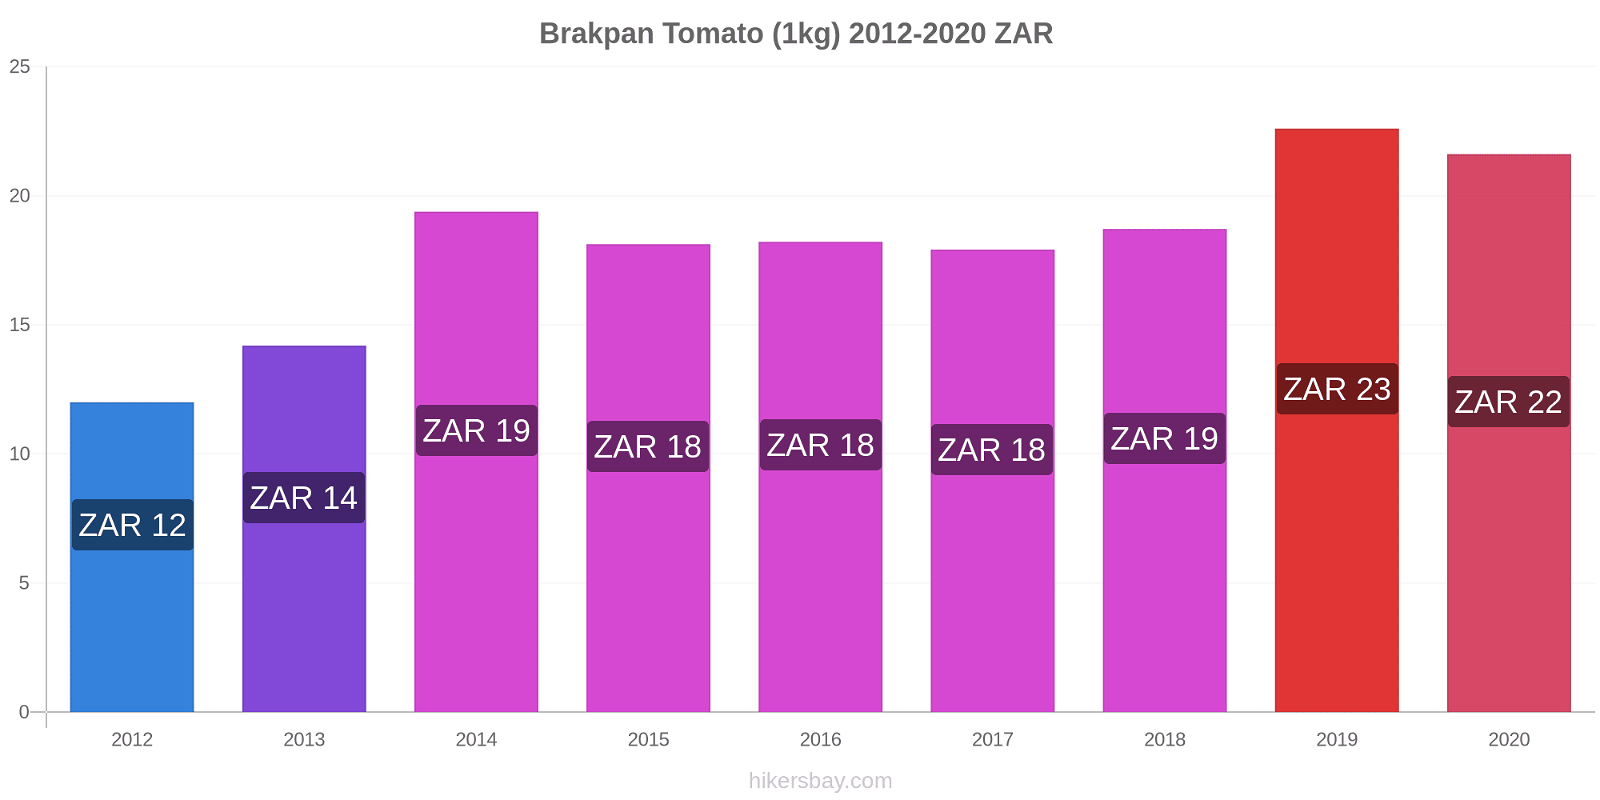 Brakpan price changes Tomato (1kg) hikersbay.com